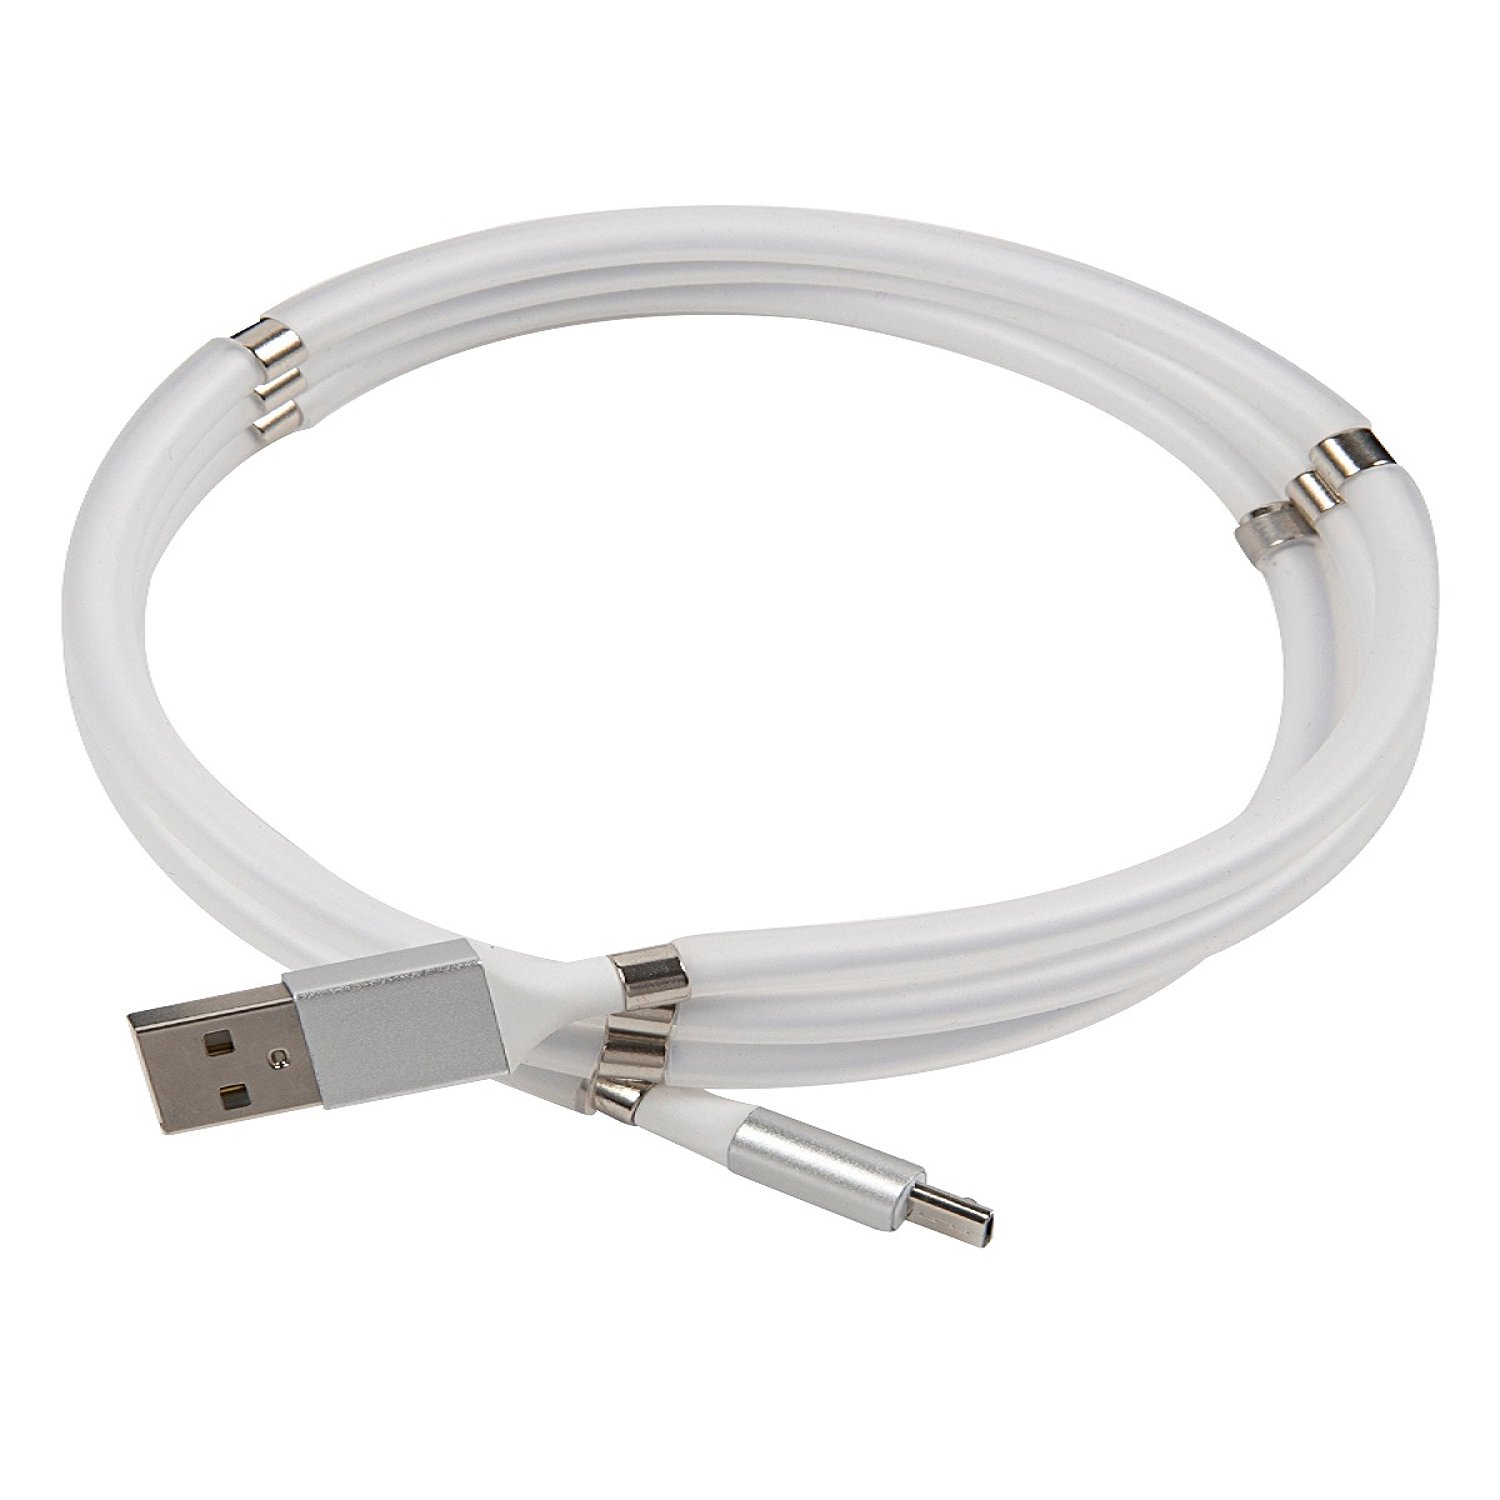 Дата-кабель MB mobility USB - micro USB, белый, скручивание на магнитах УТ000021319 радиоприемник mobility mb 01 ут000029860 с будильником usb